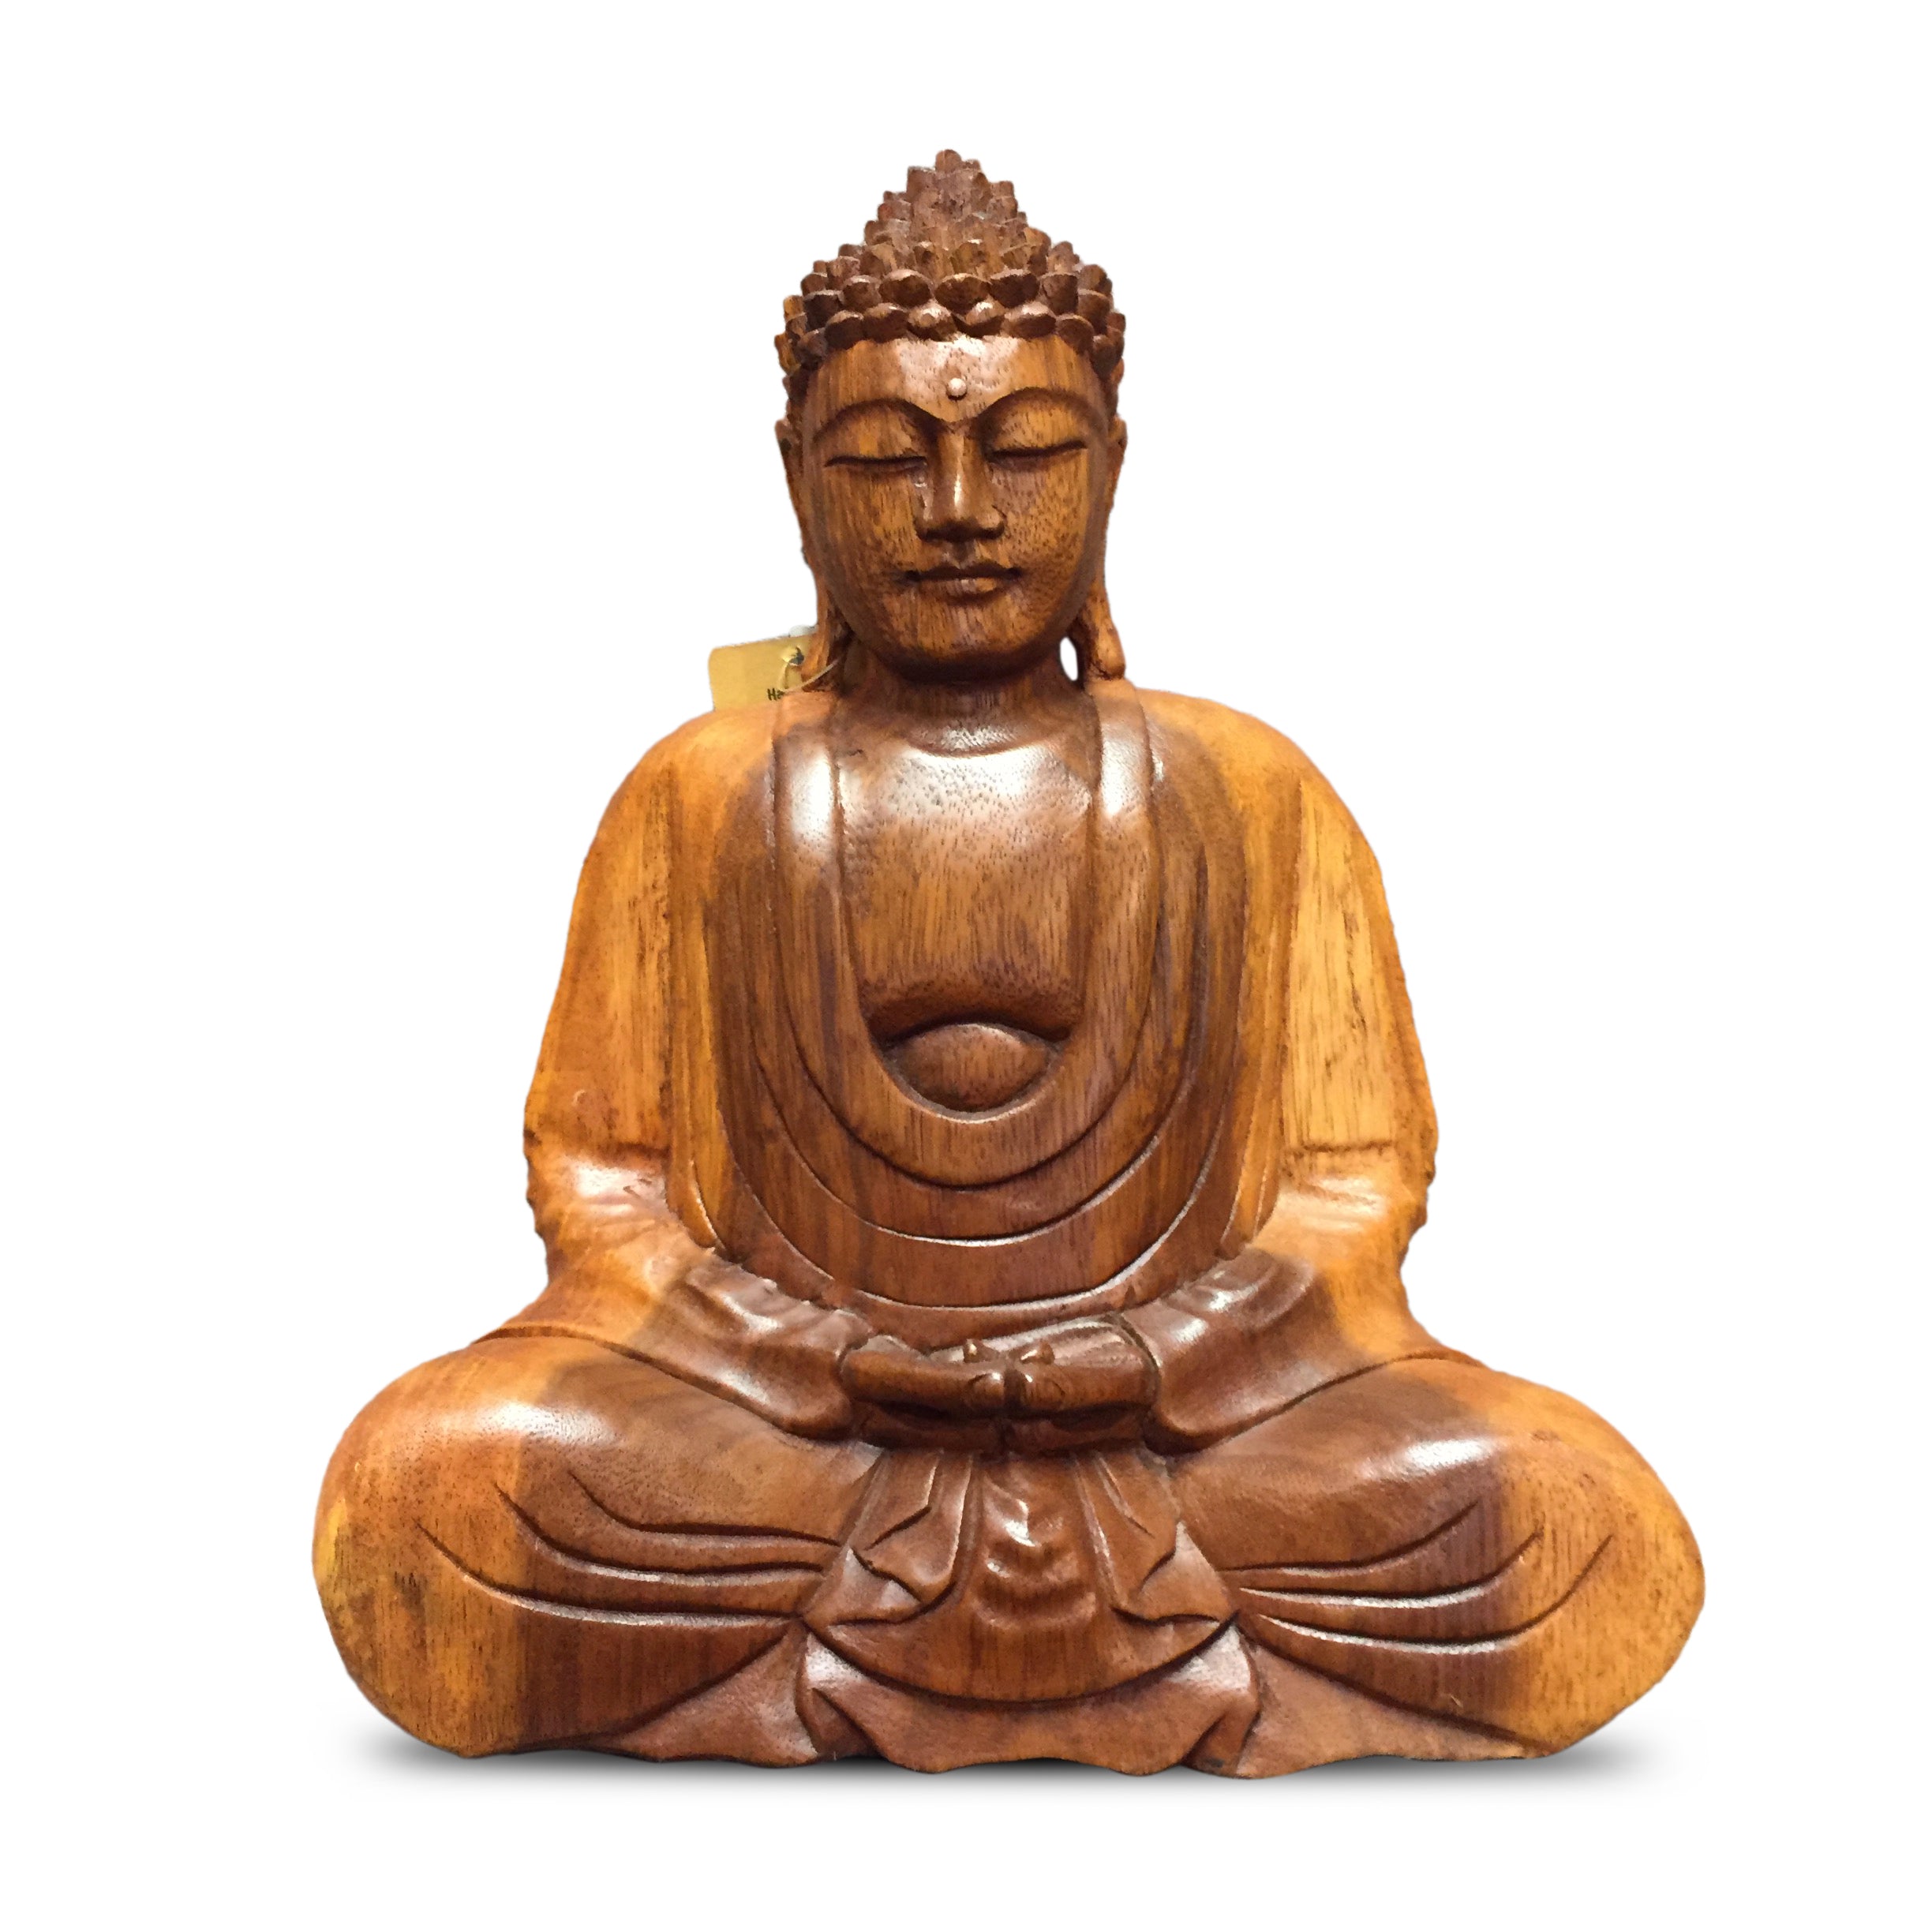 Meditating Wooden Buddha Statue